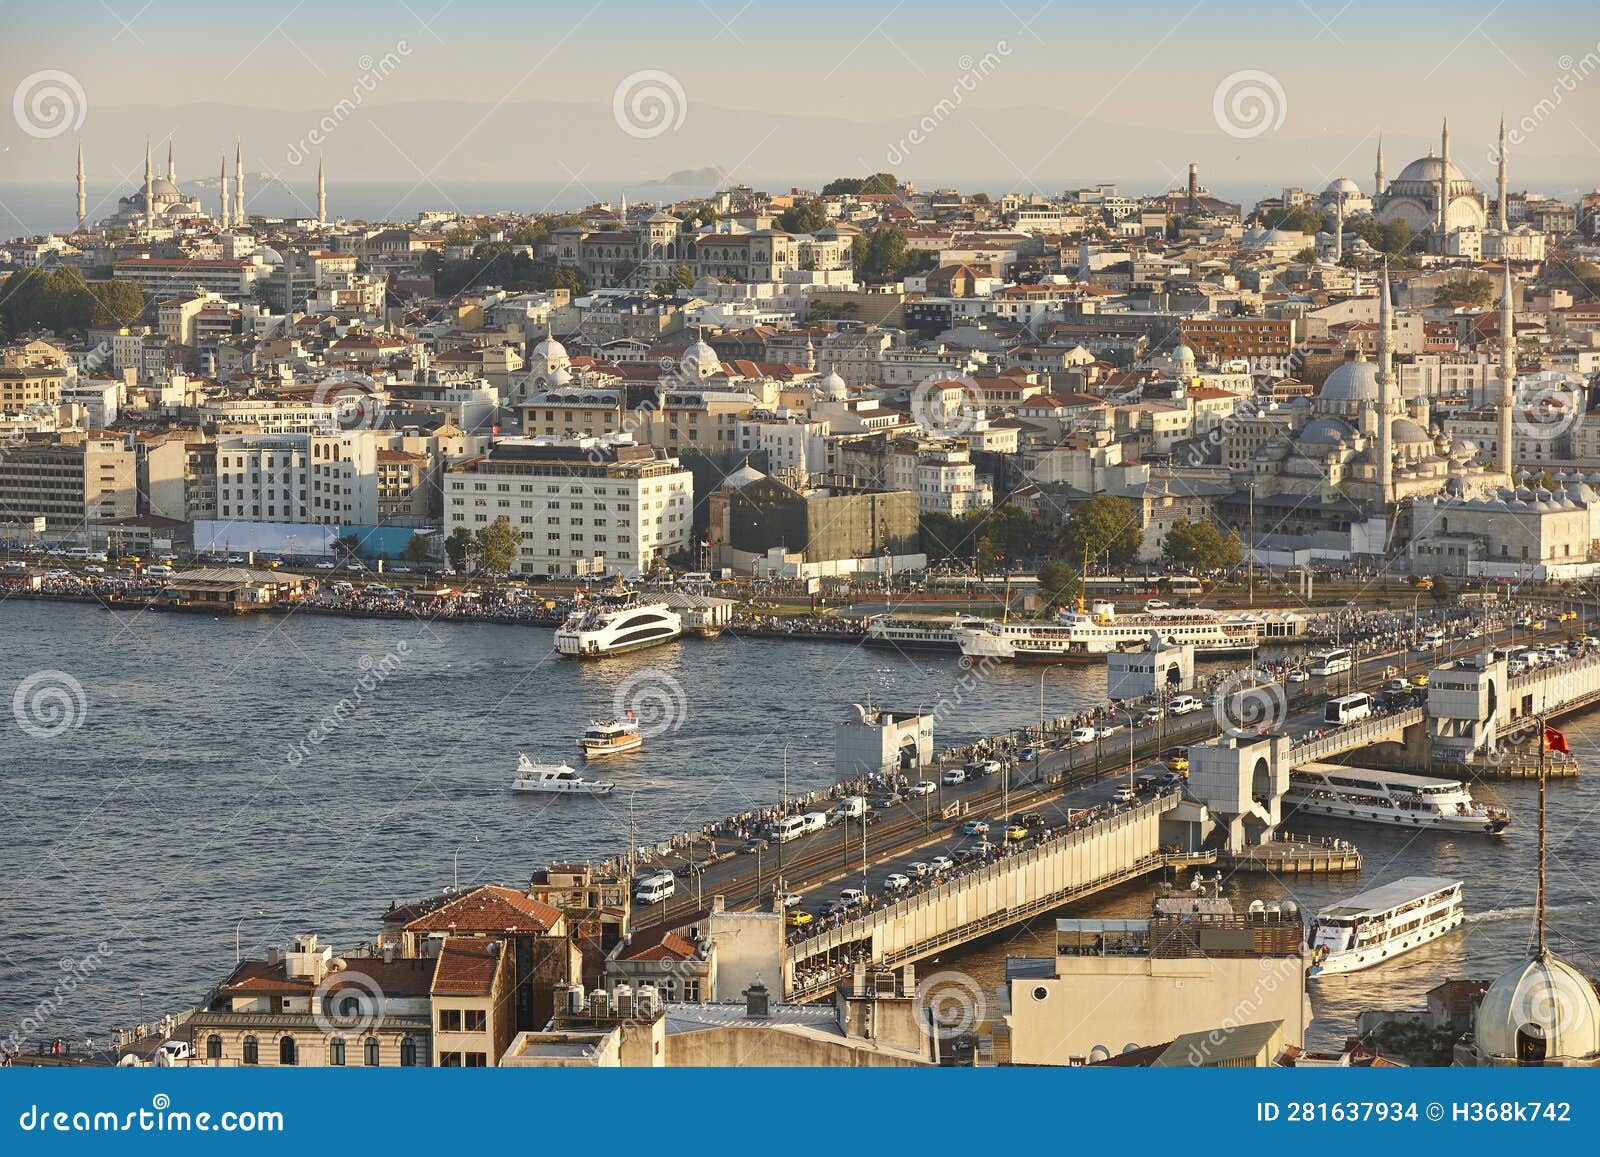 istanbul city center. orient and occident seaside. galata bridge. turkey